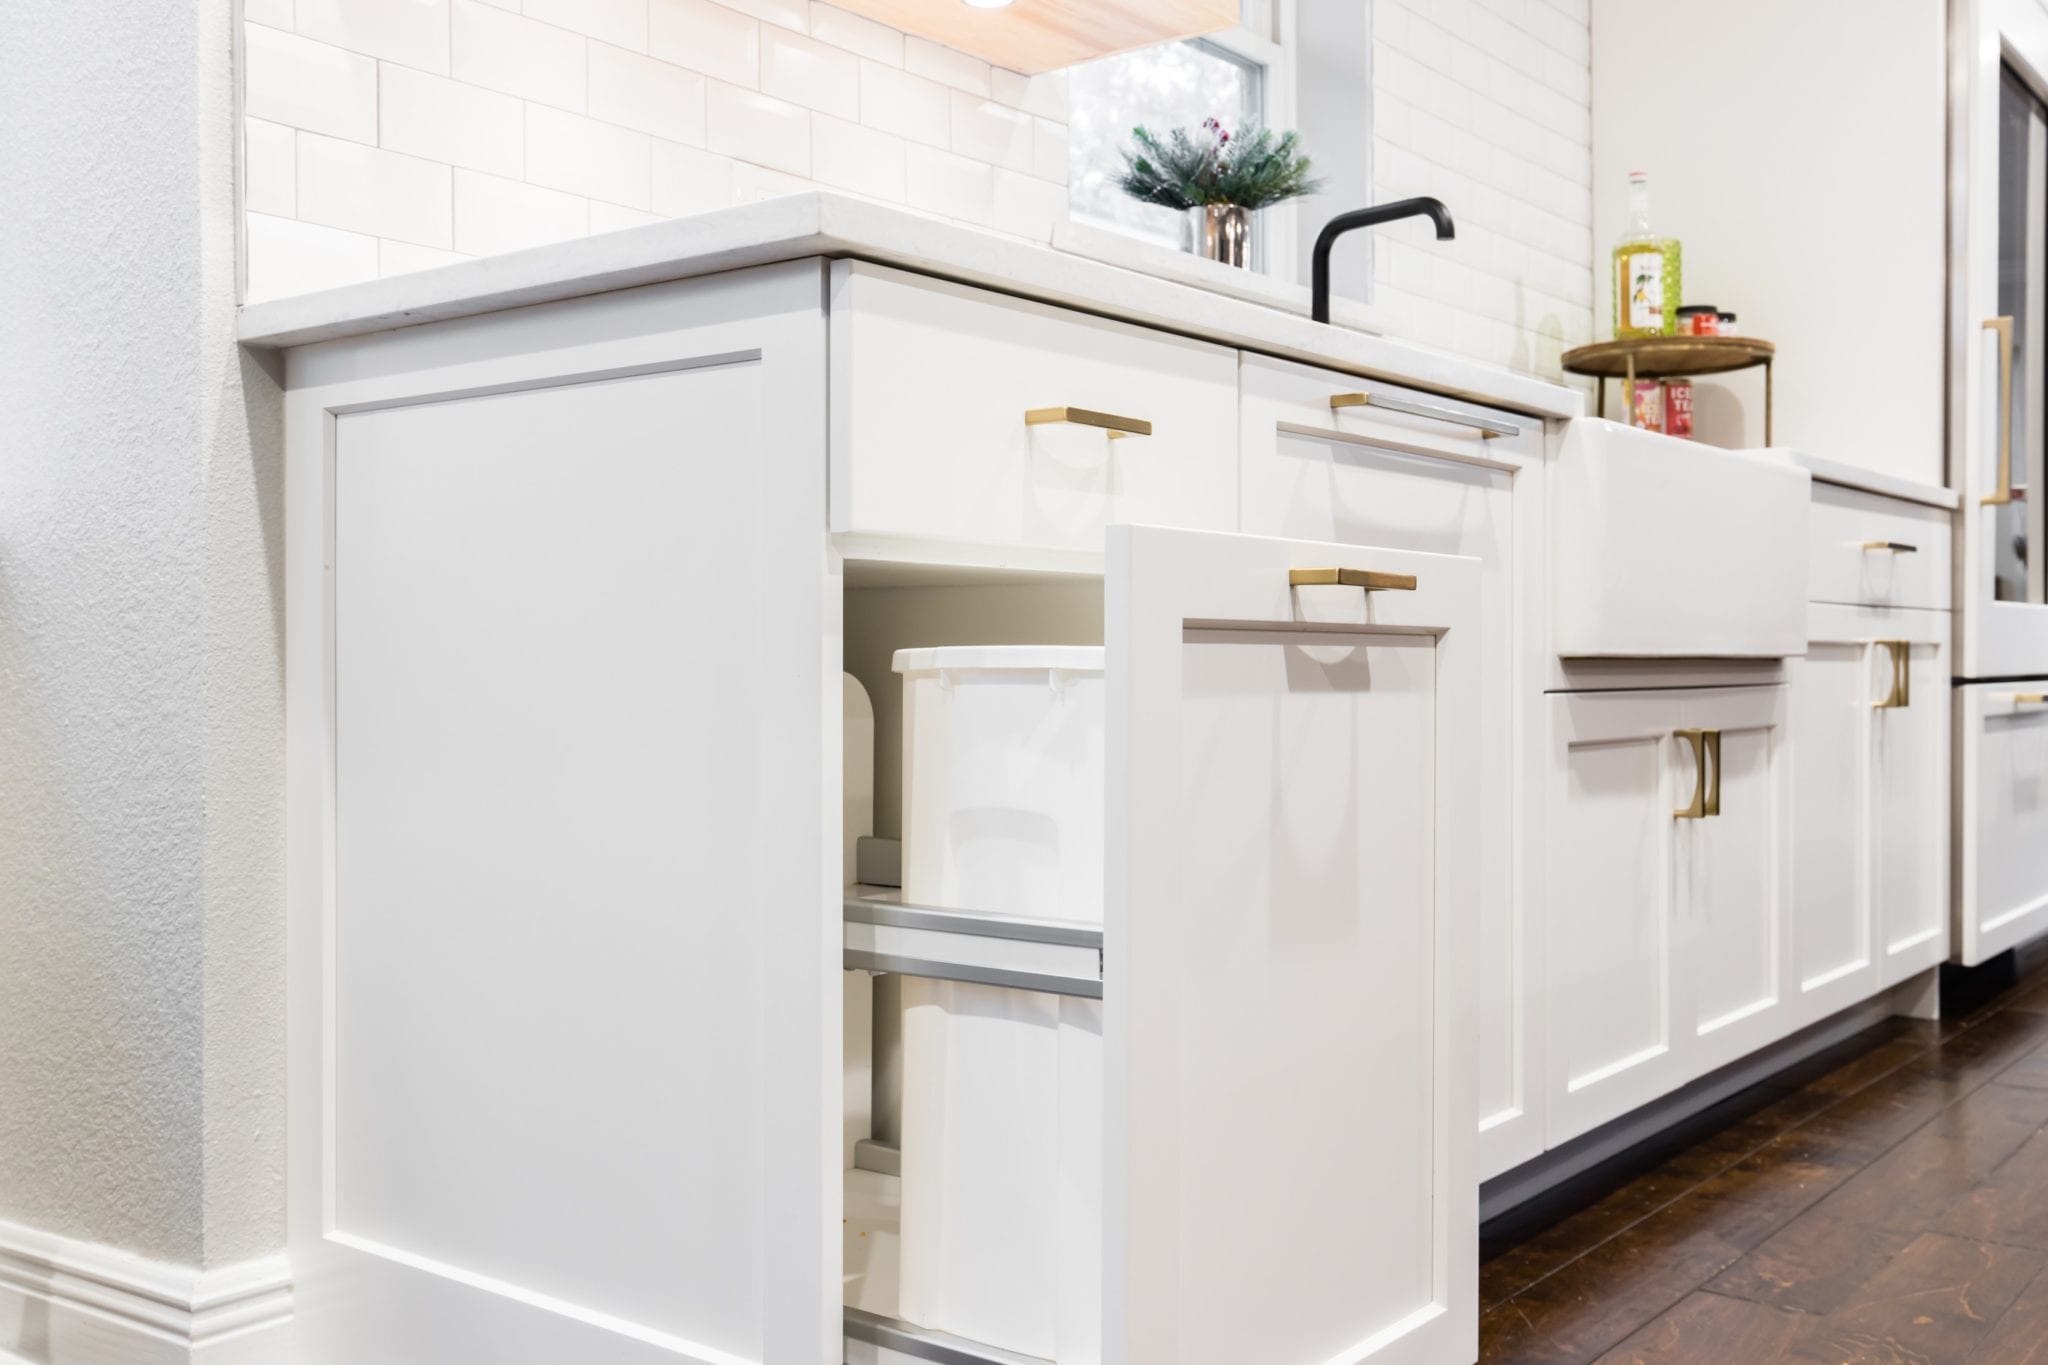 Single-Family-Home-Kitchen-Remodel-Custom-Cabinets-Backsplash-New-Wood-Floors-Trash-Storage-HighlandMeadows-75238_2